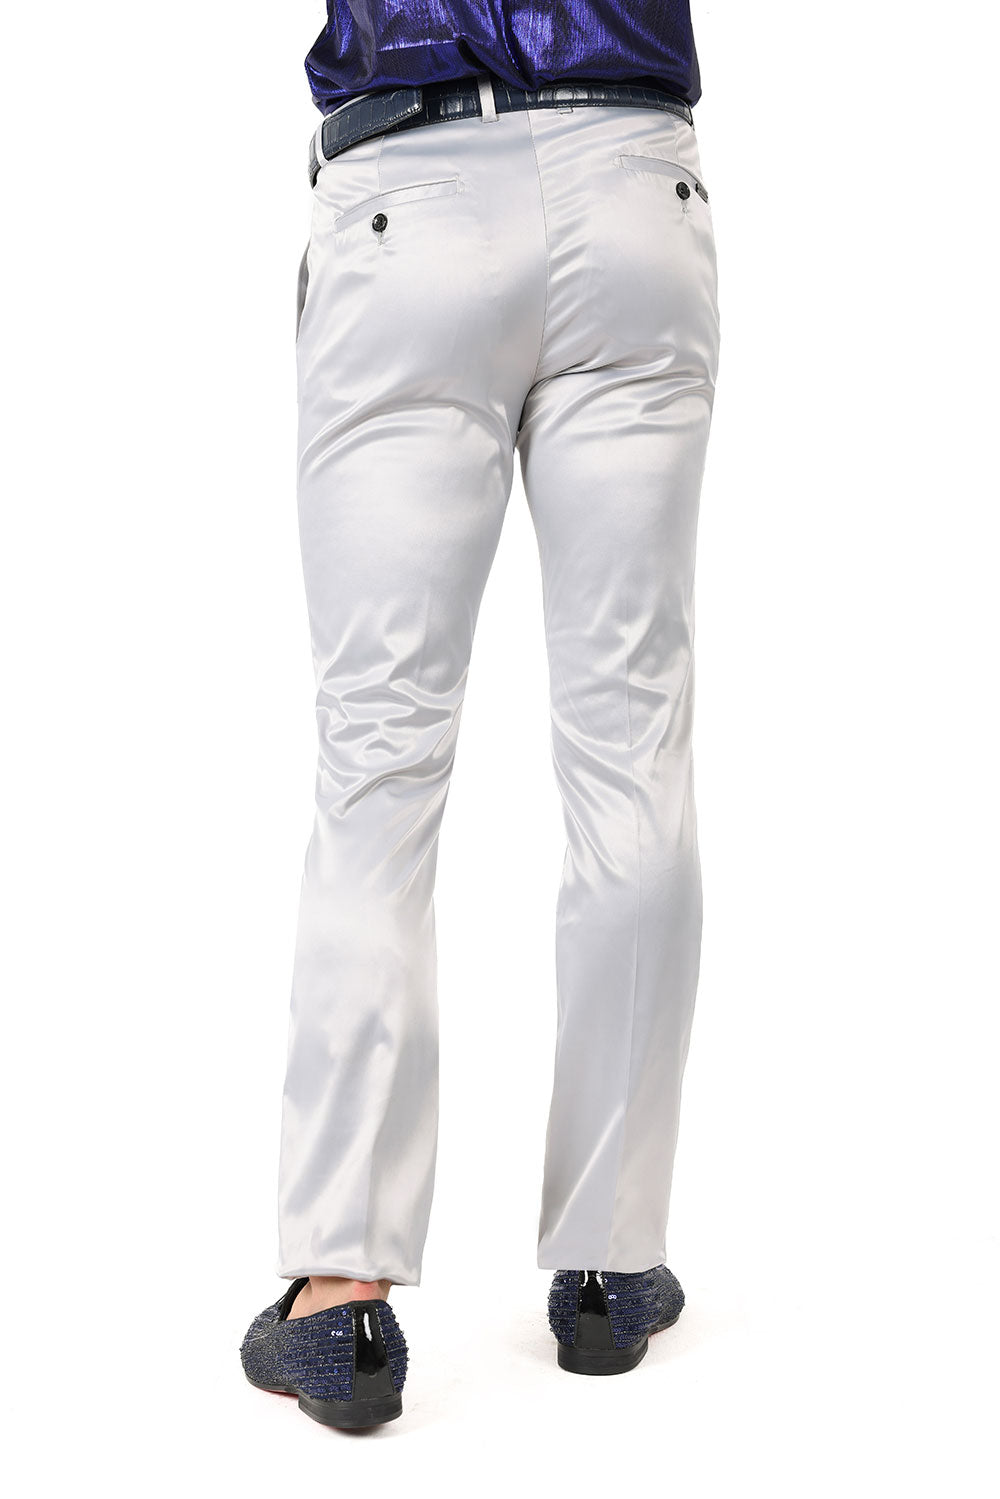 BARABAS Men's Solid Color Shiny Chino Pants VP1010 Silver